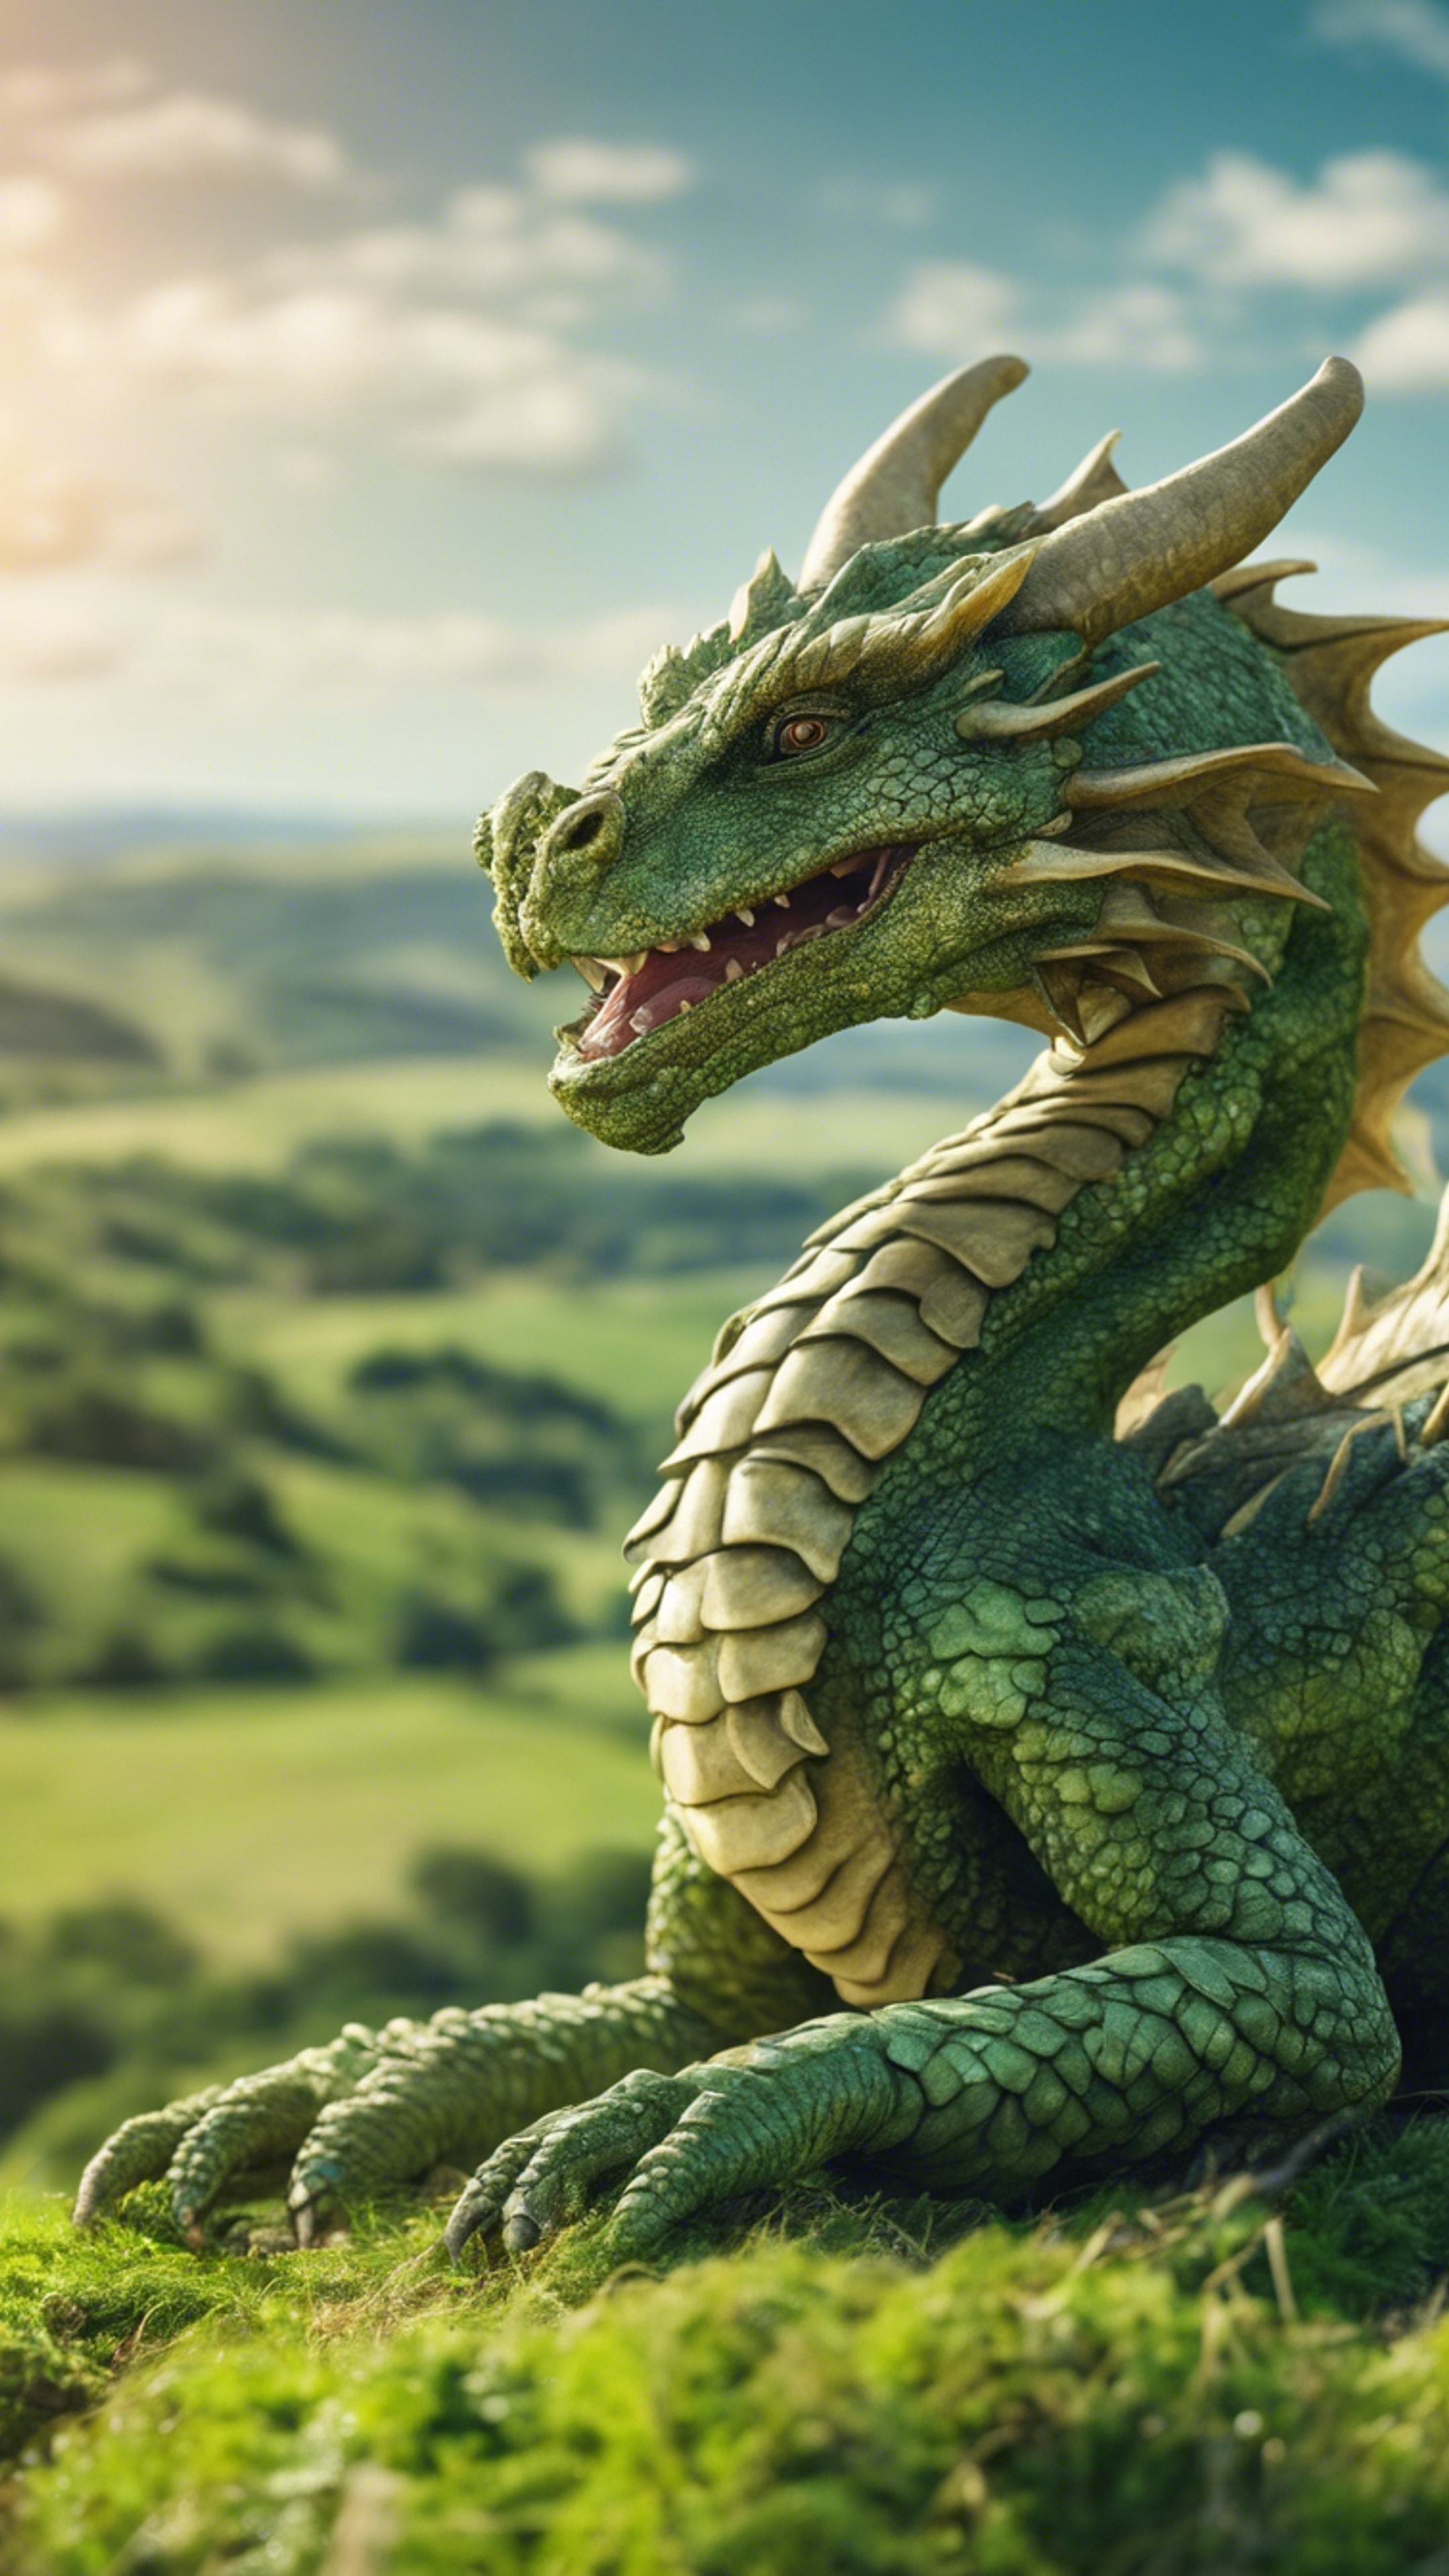 An Earth dragon, resting amidst rolling green hills under a sunny sky. Wallpaper[ac1302e161bf45a2ada1]